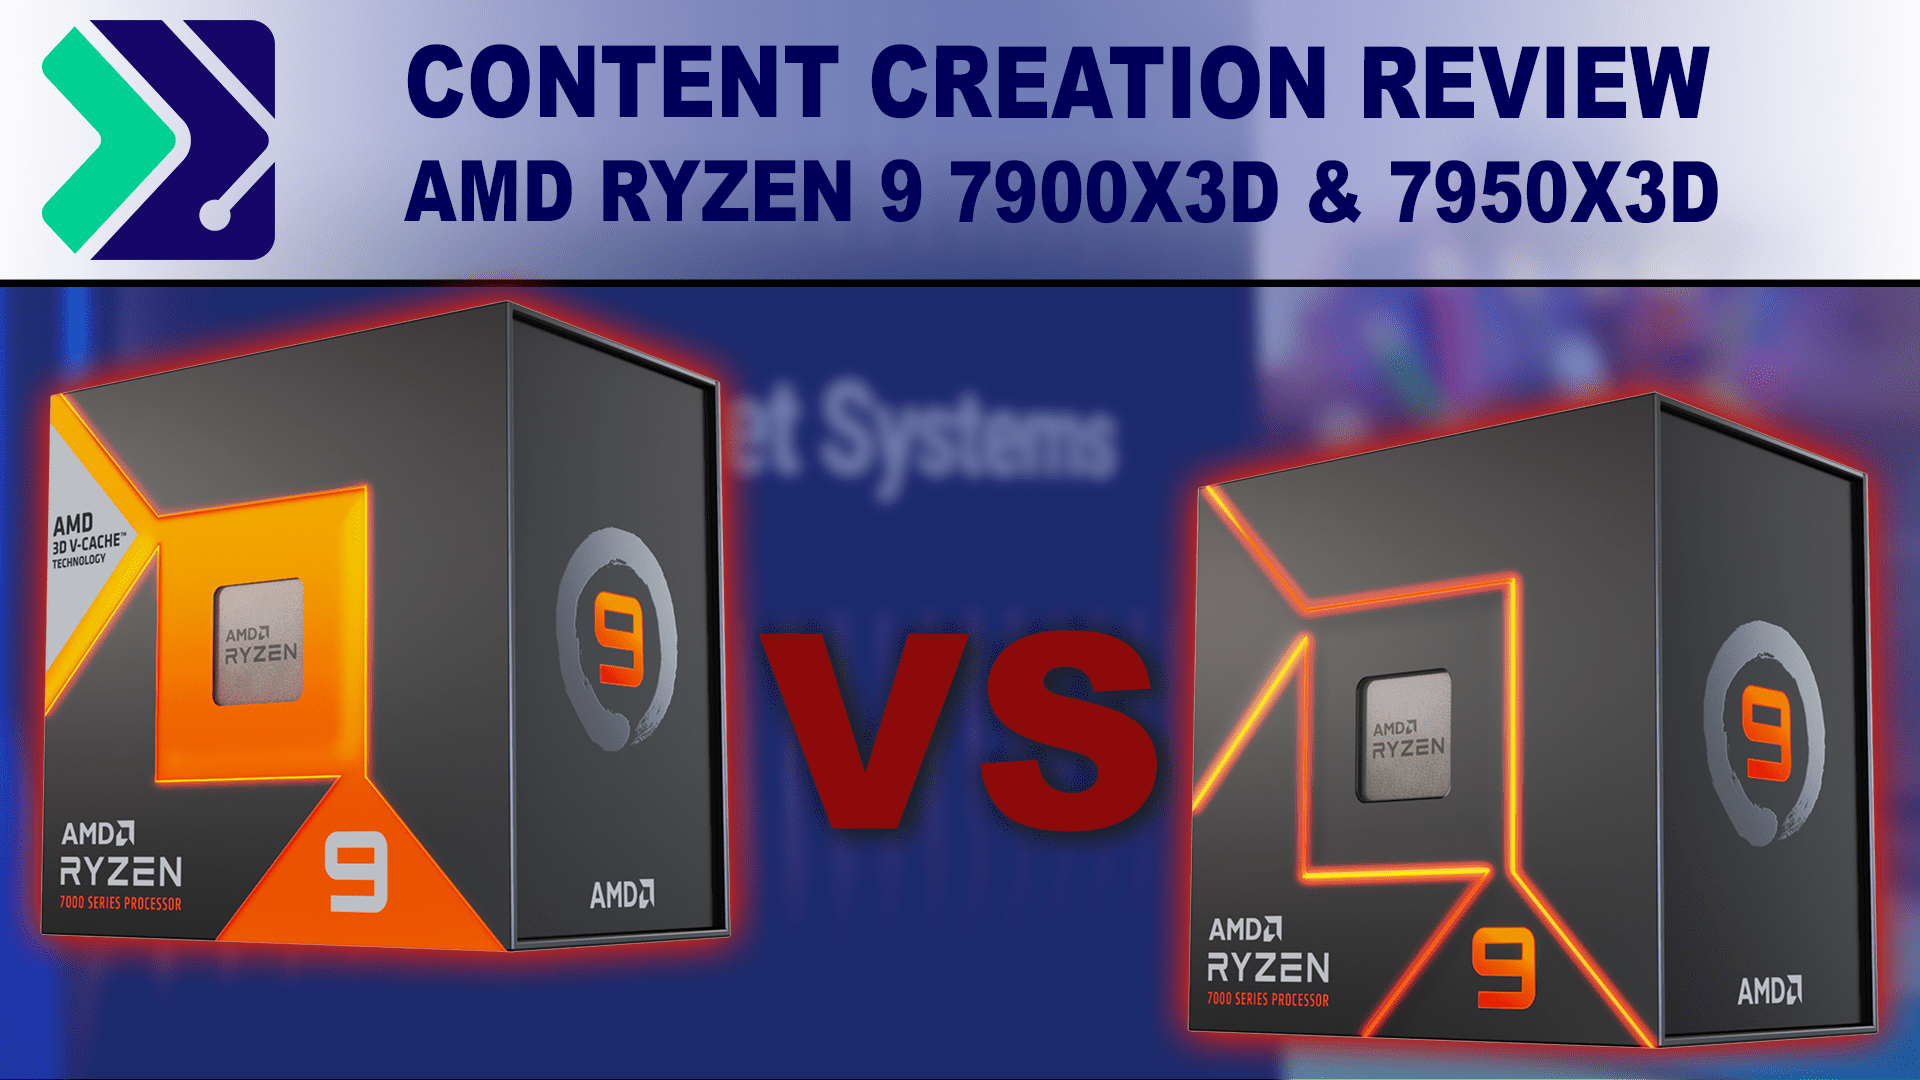 AMD Ryzen 9 7900X3D 7950X3D Content Creation Review